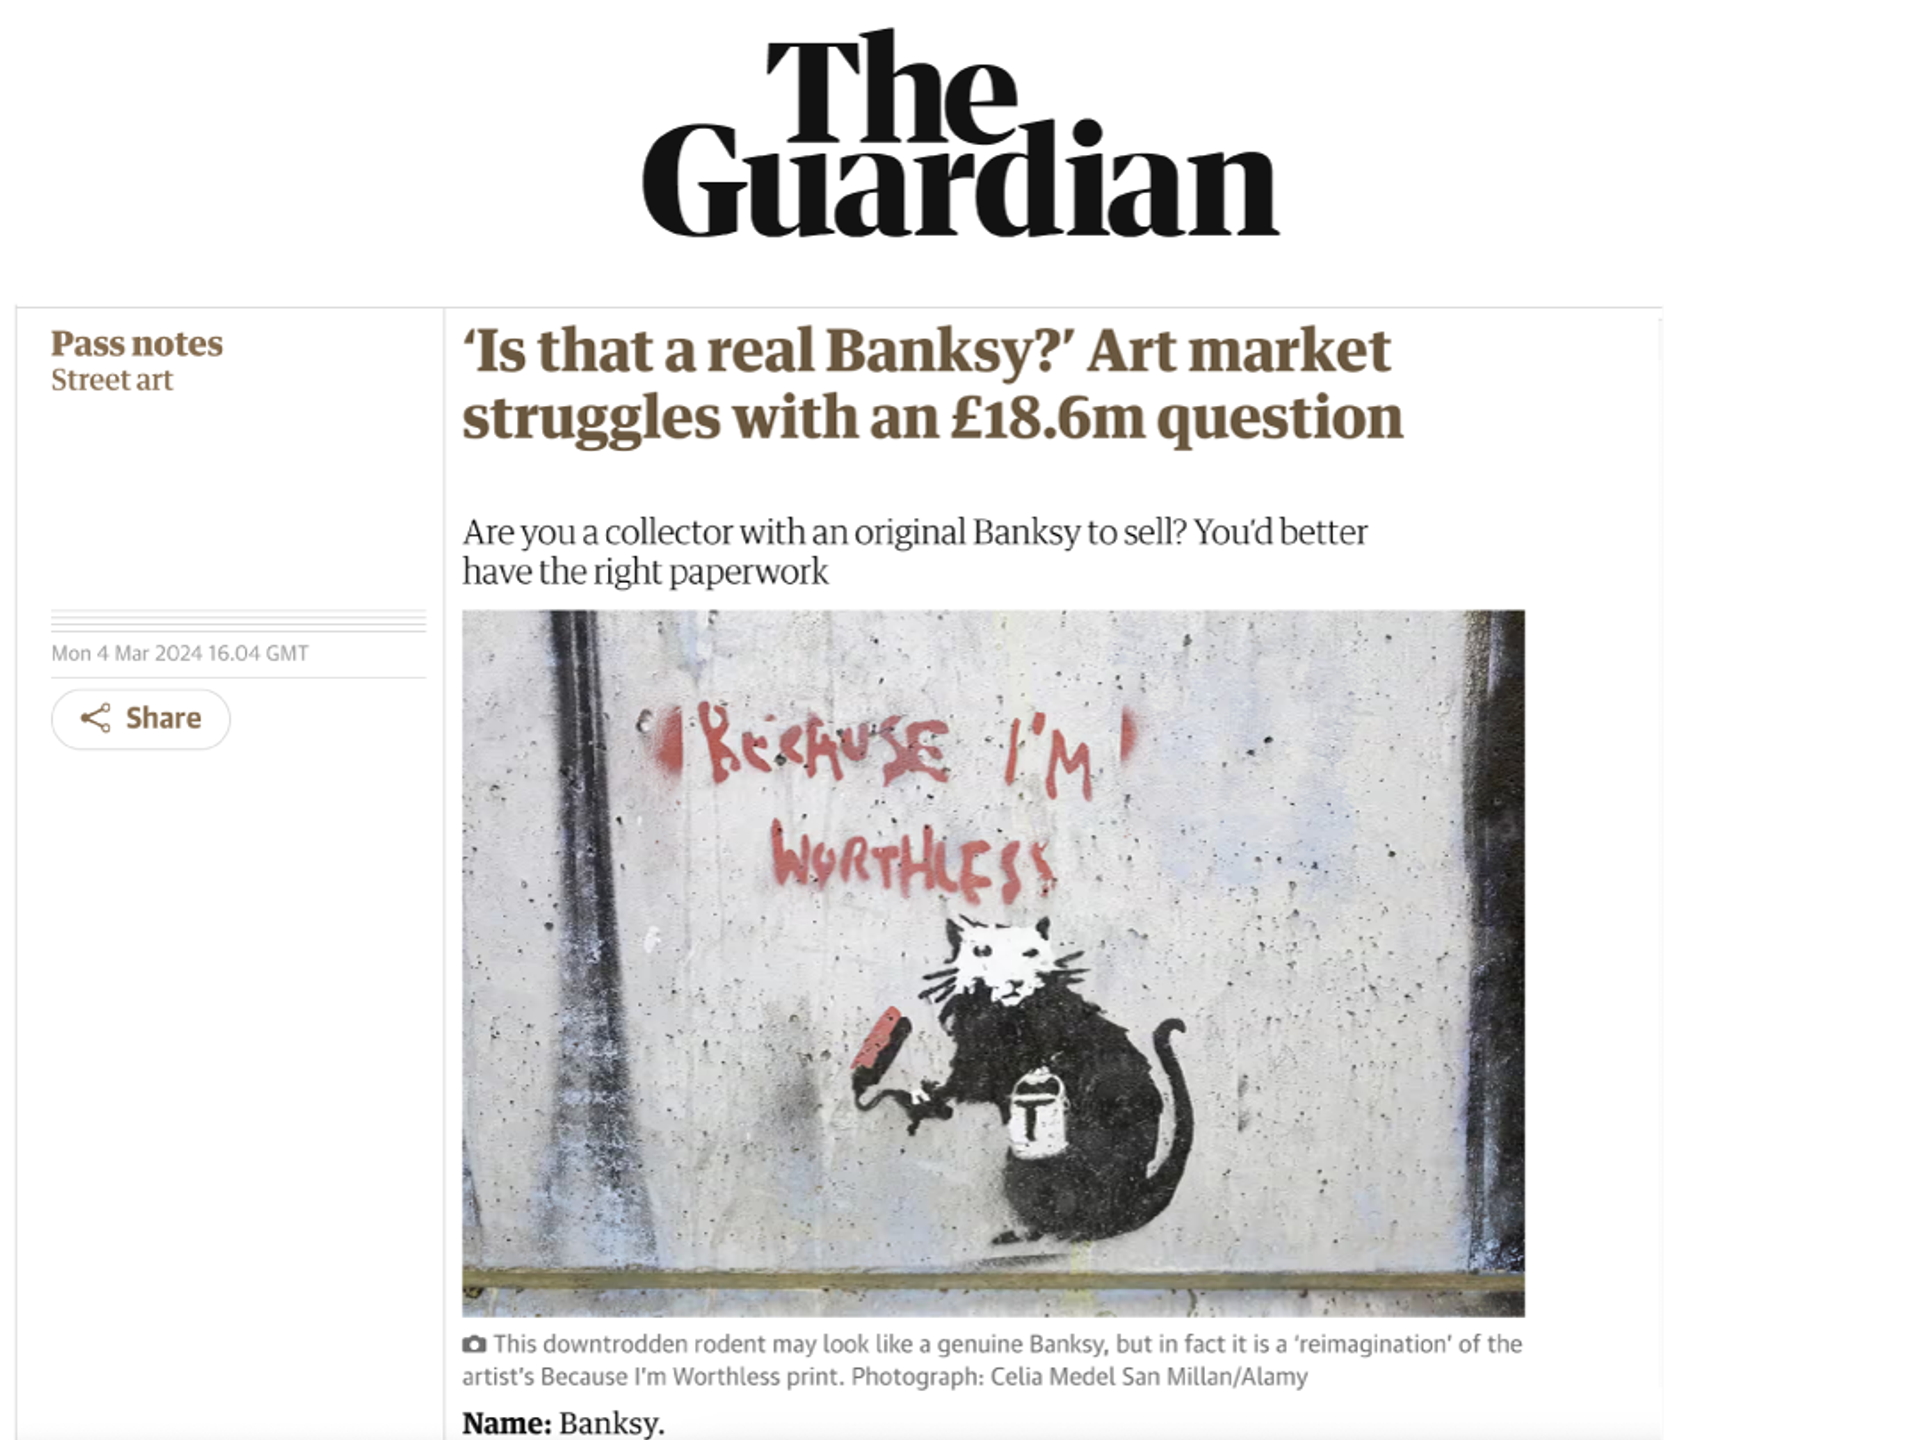 The Guardian Banksy